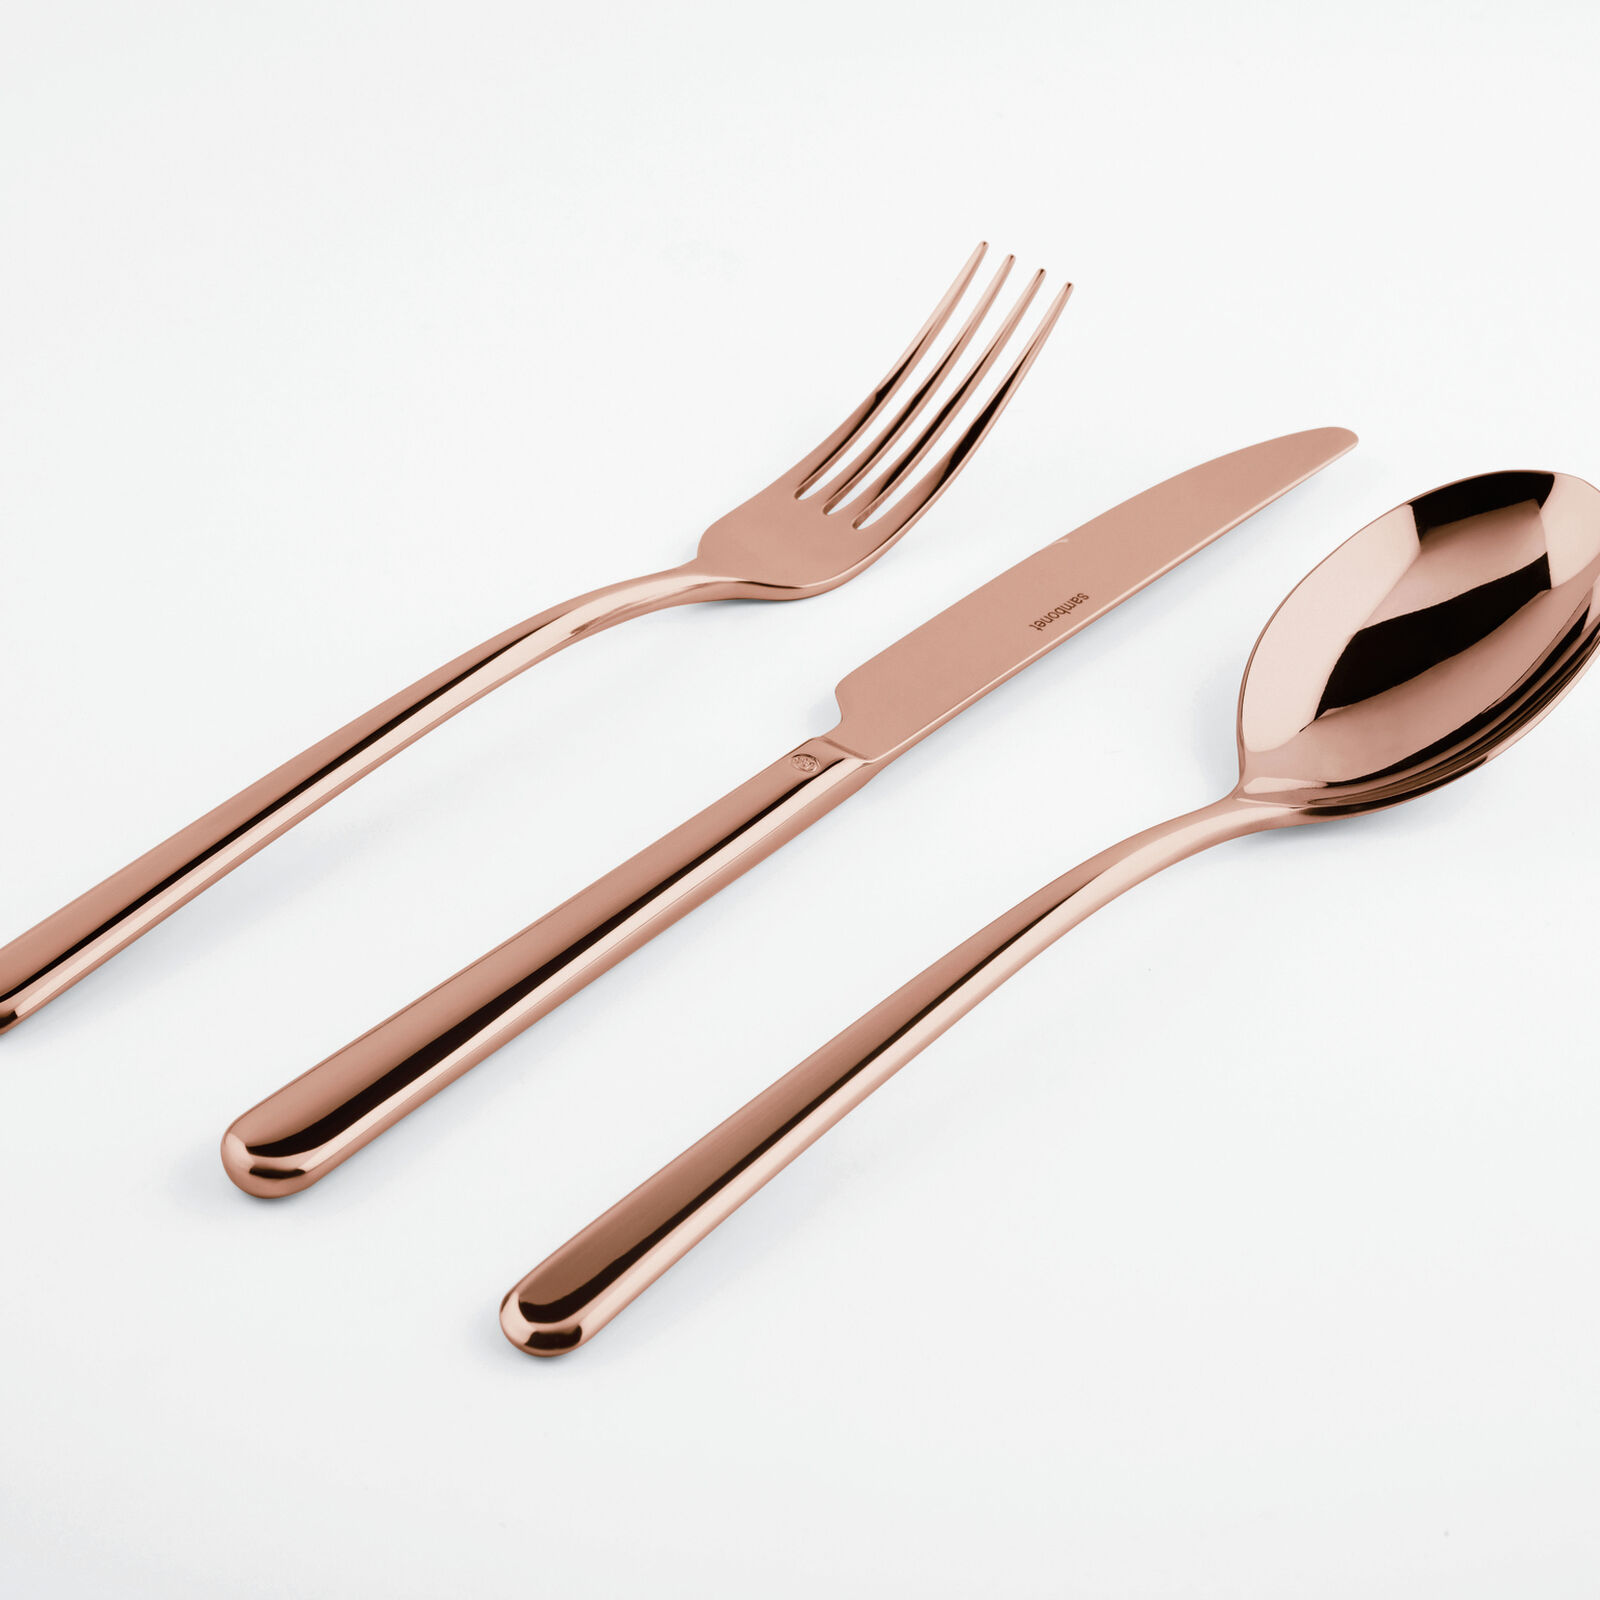 Matte Gold Flatware: Master the Art of Elegant Dining